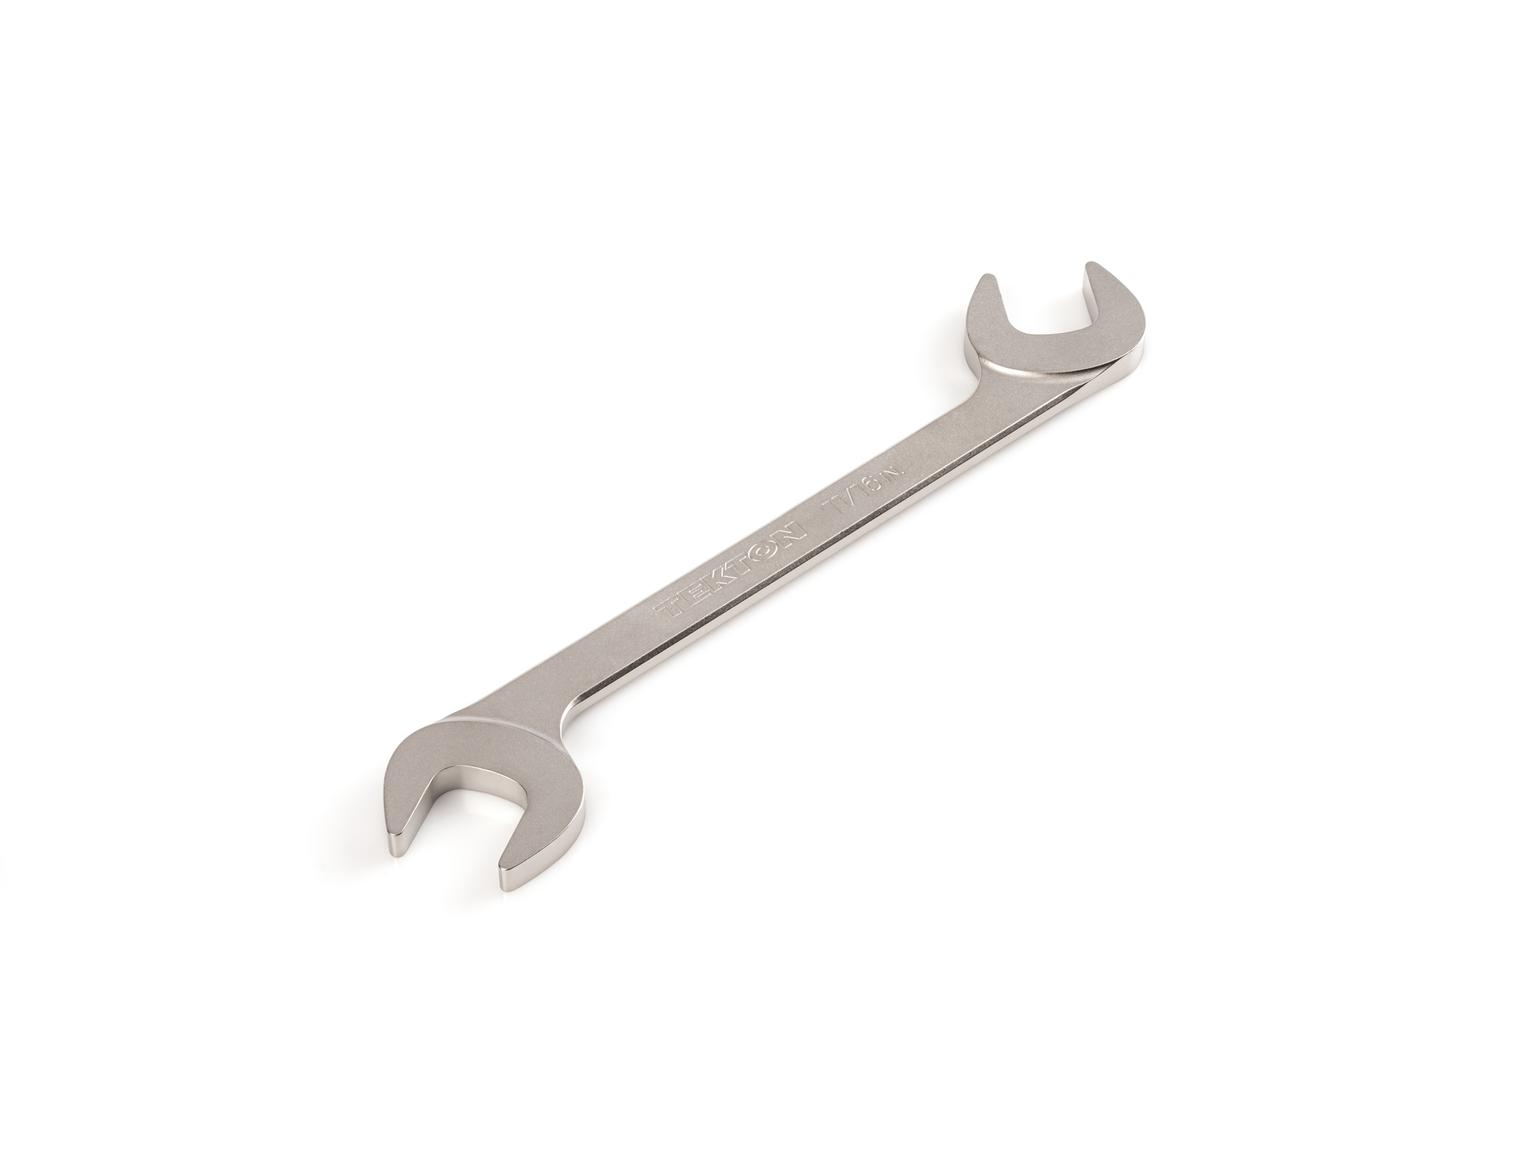 TEKTON WAE83217-T 11/16 Inch Angle Head Open End Wrench